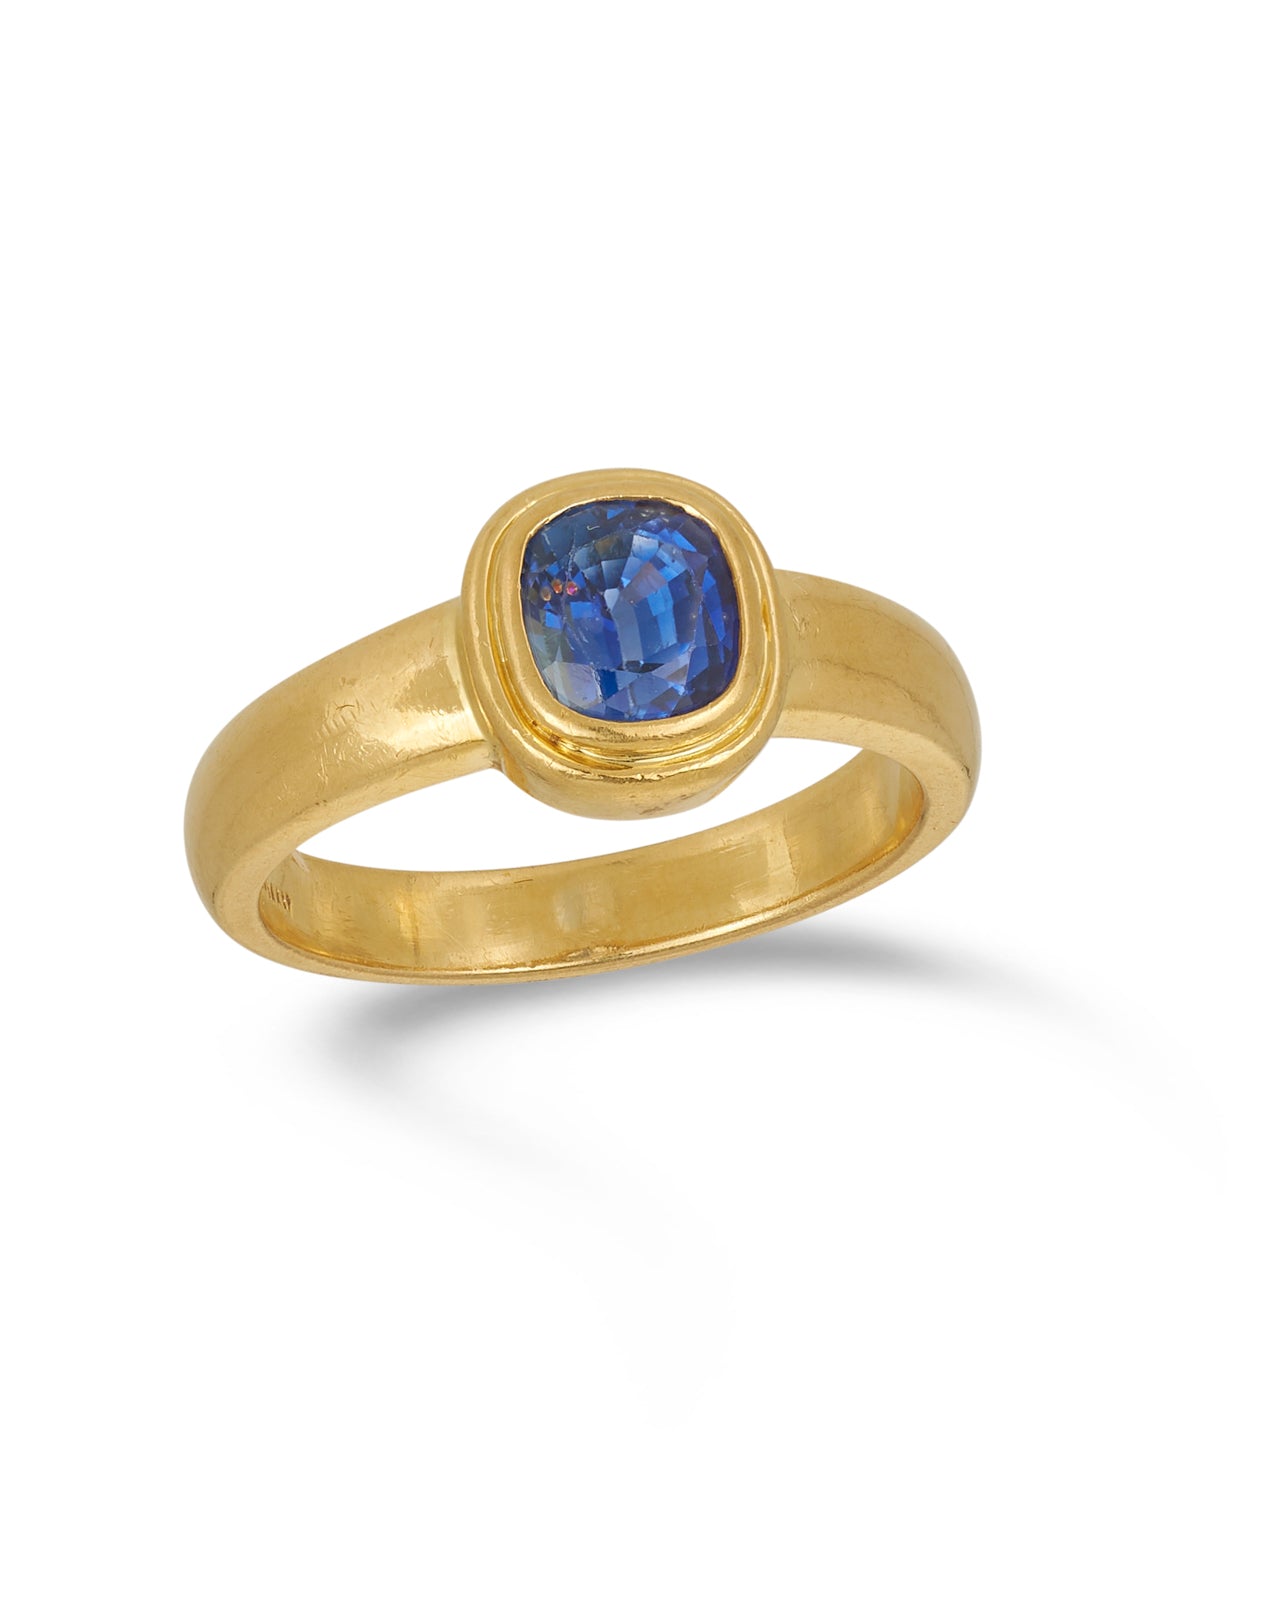 Contemporary bezel set gold & sapphire ring